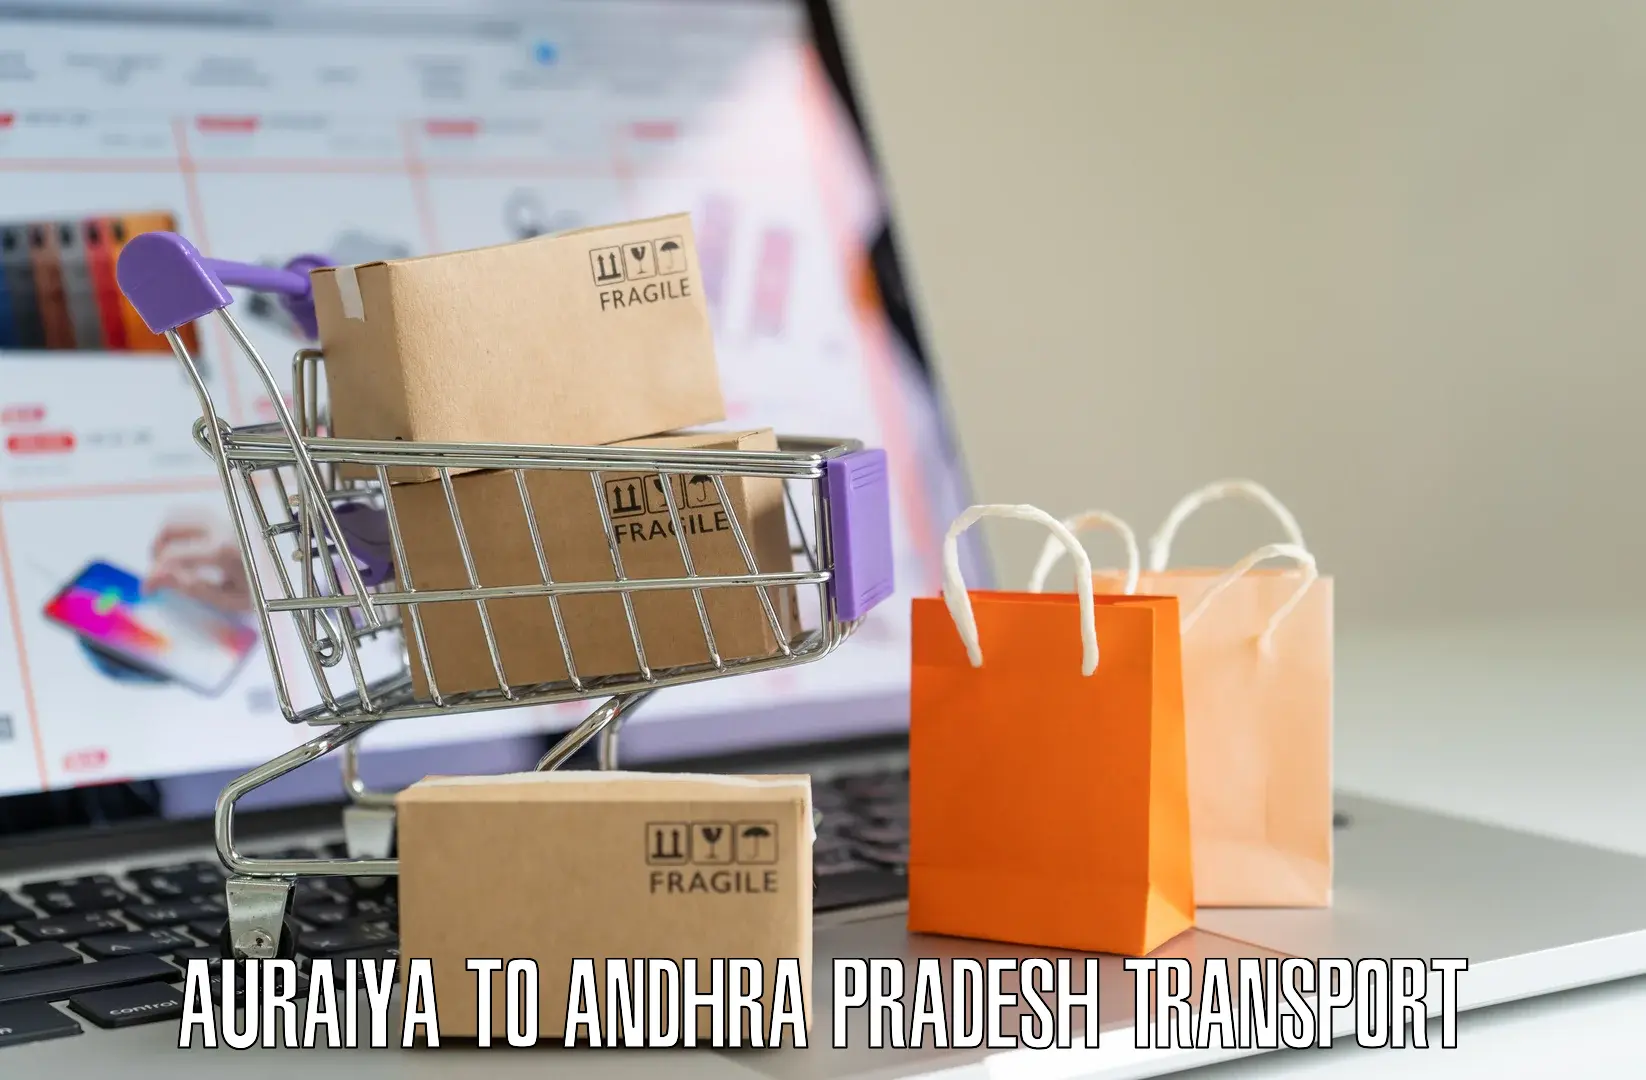 Transport in sharing Auraiya to Sri City